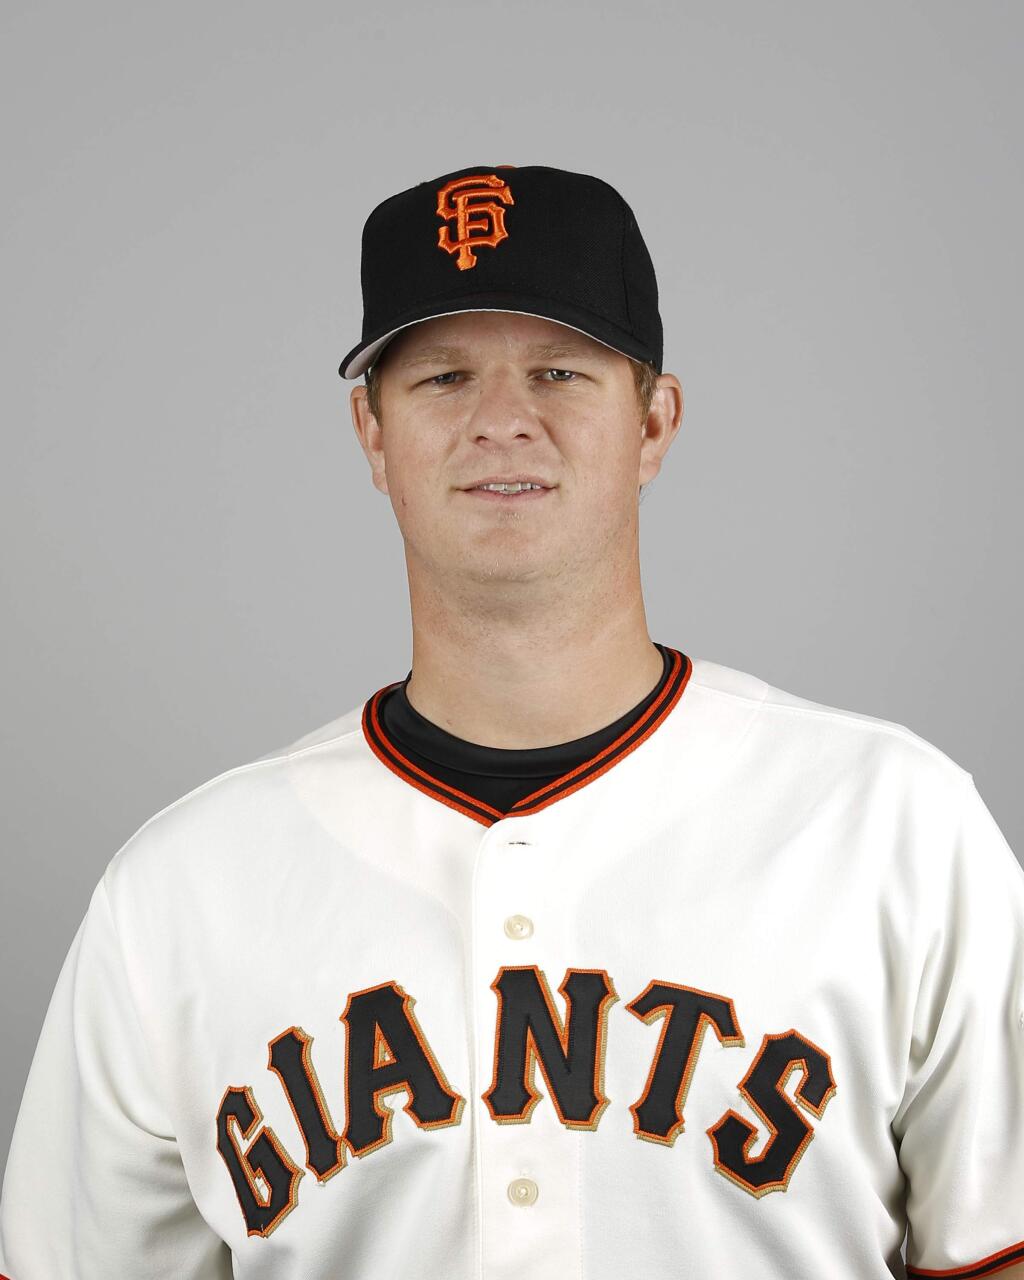 Matt Cain of the San Francisco Giants. (AP Photo/Morry Gash)